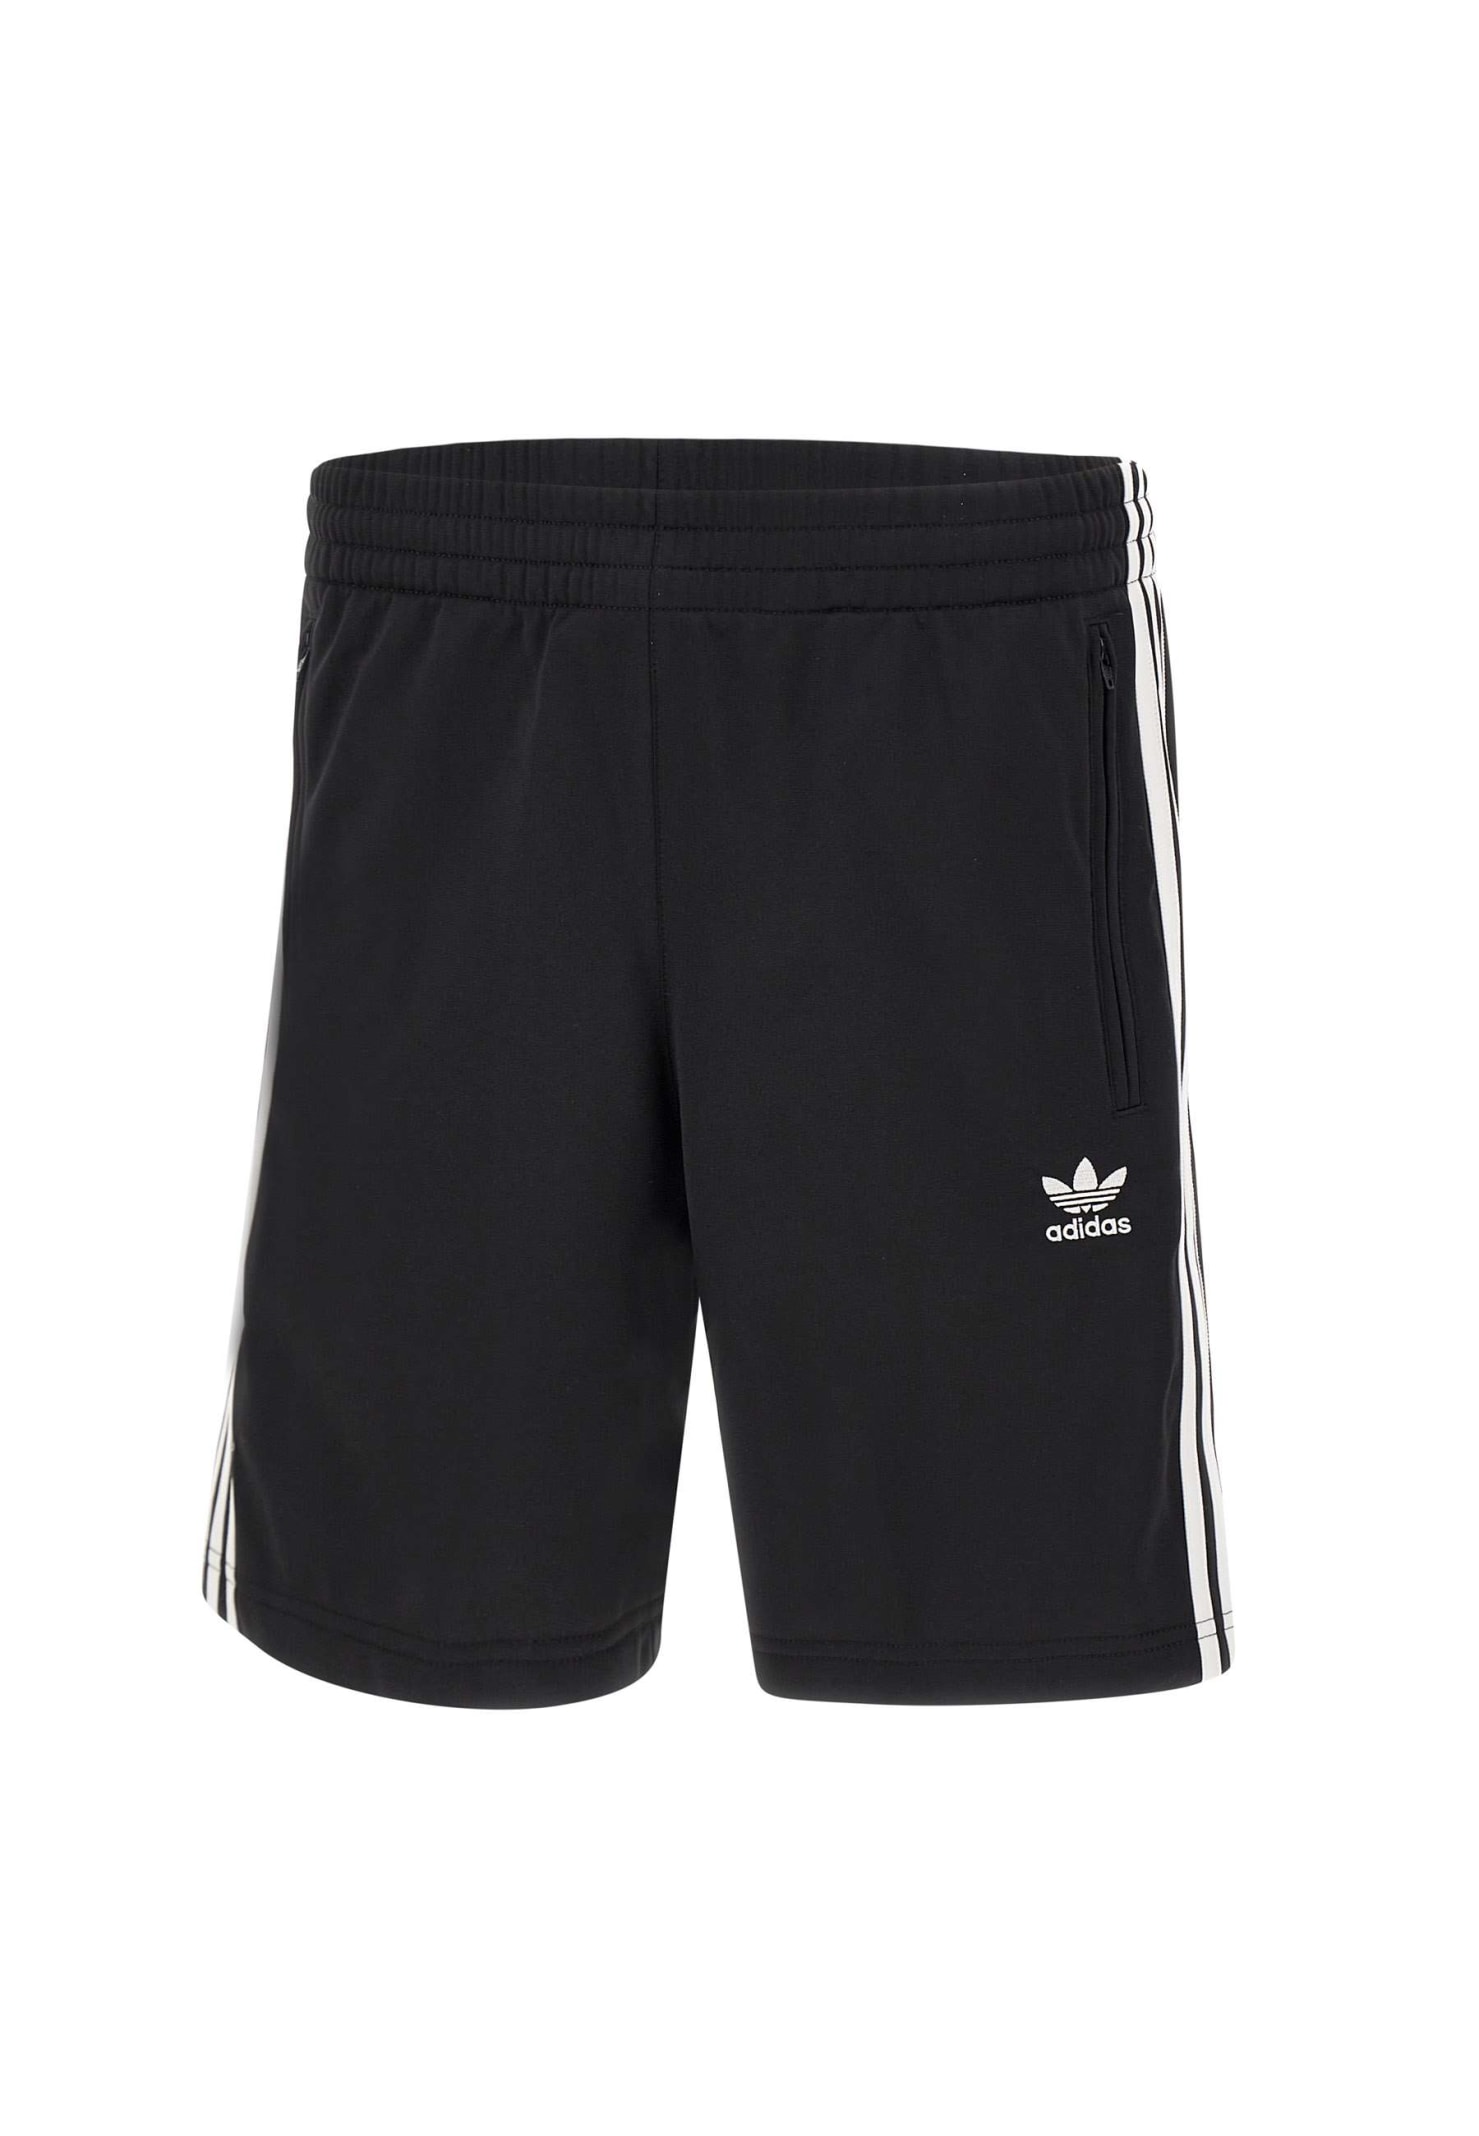 Adidas Originals Fbird Shorts In Black